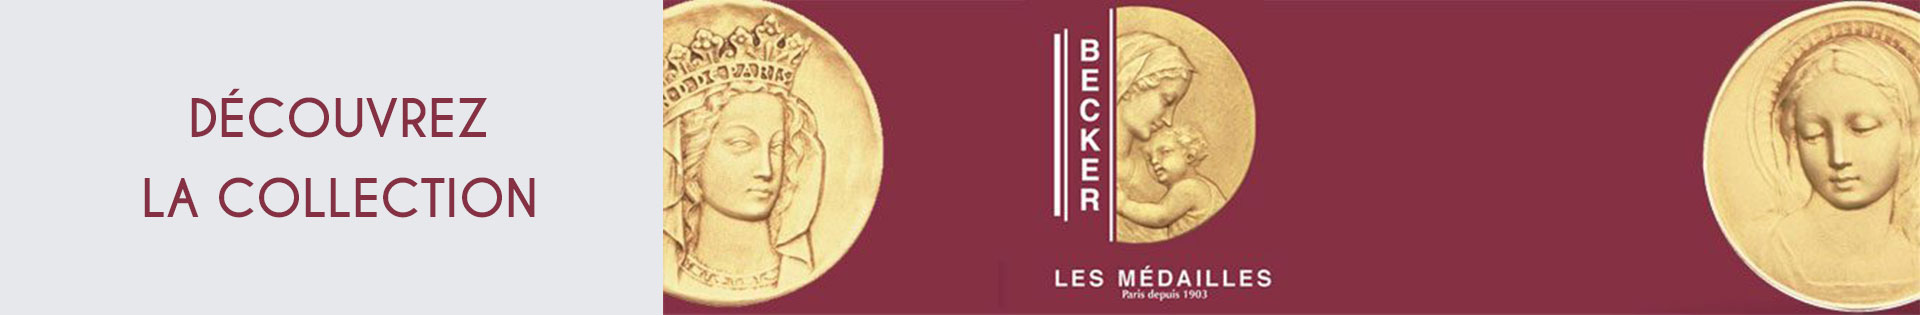 Marques de bijoux - Becker - or 750 millièmes